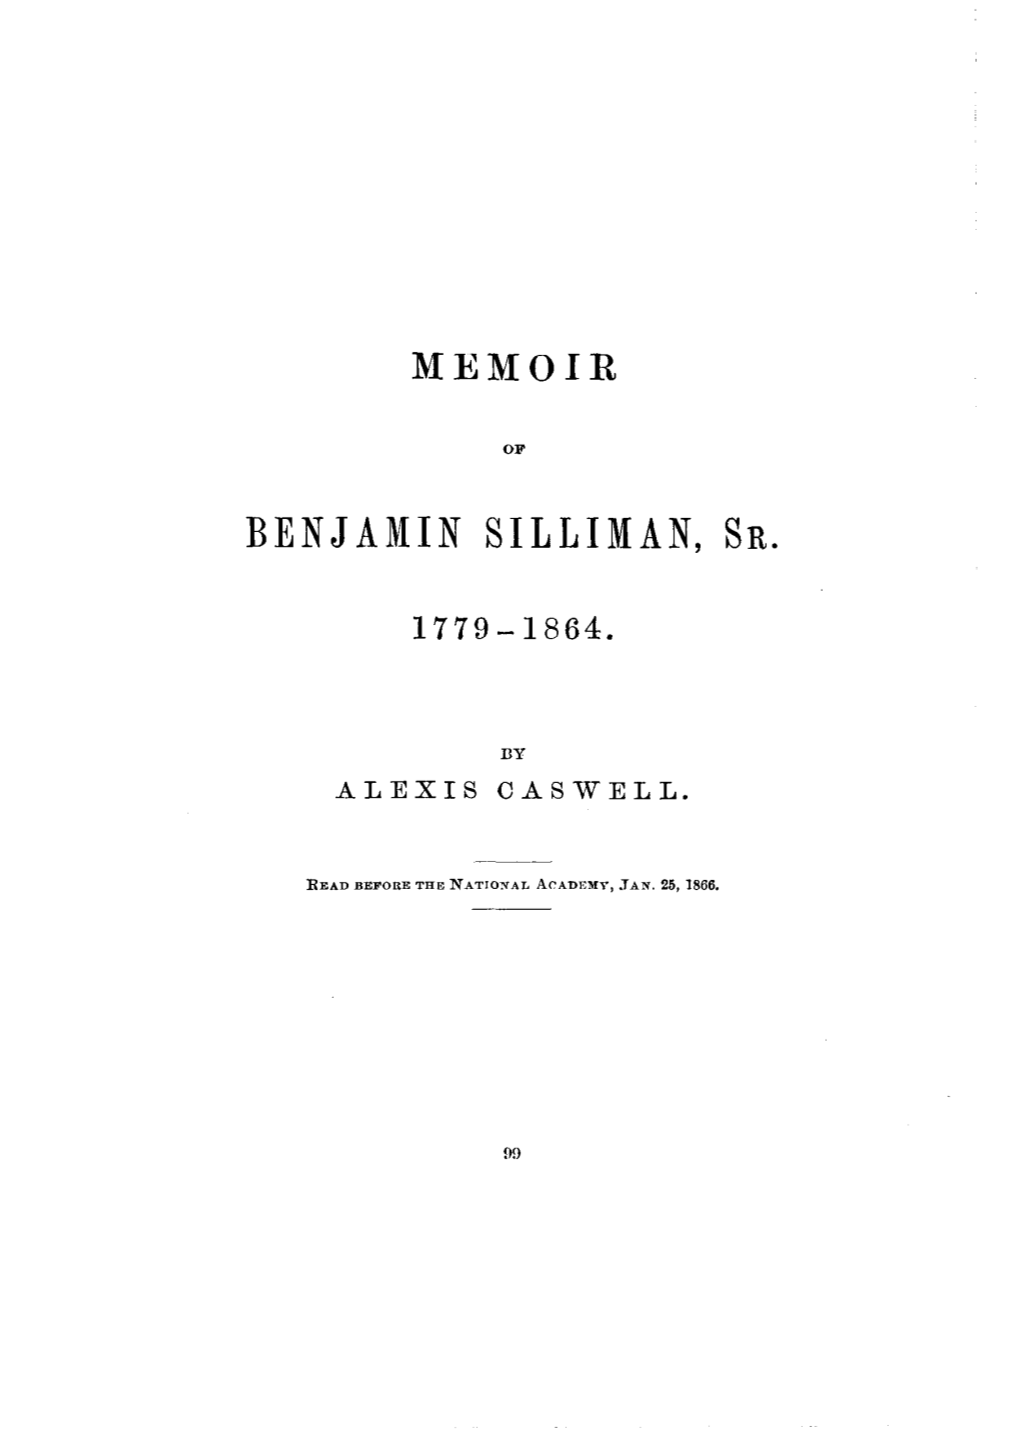 Benjamin Silliman, Sr